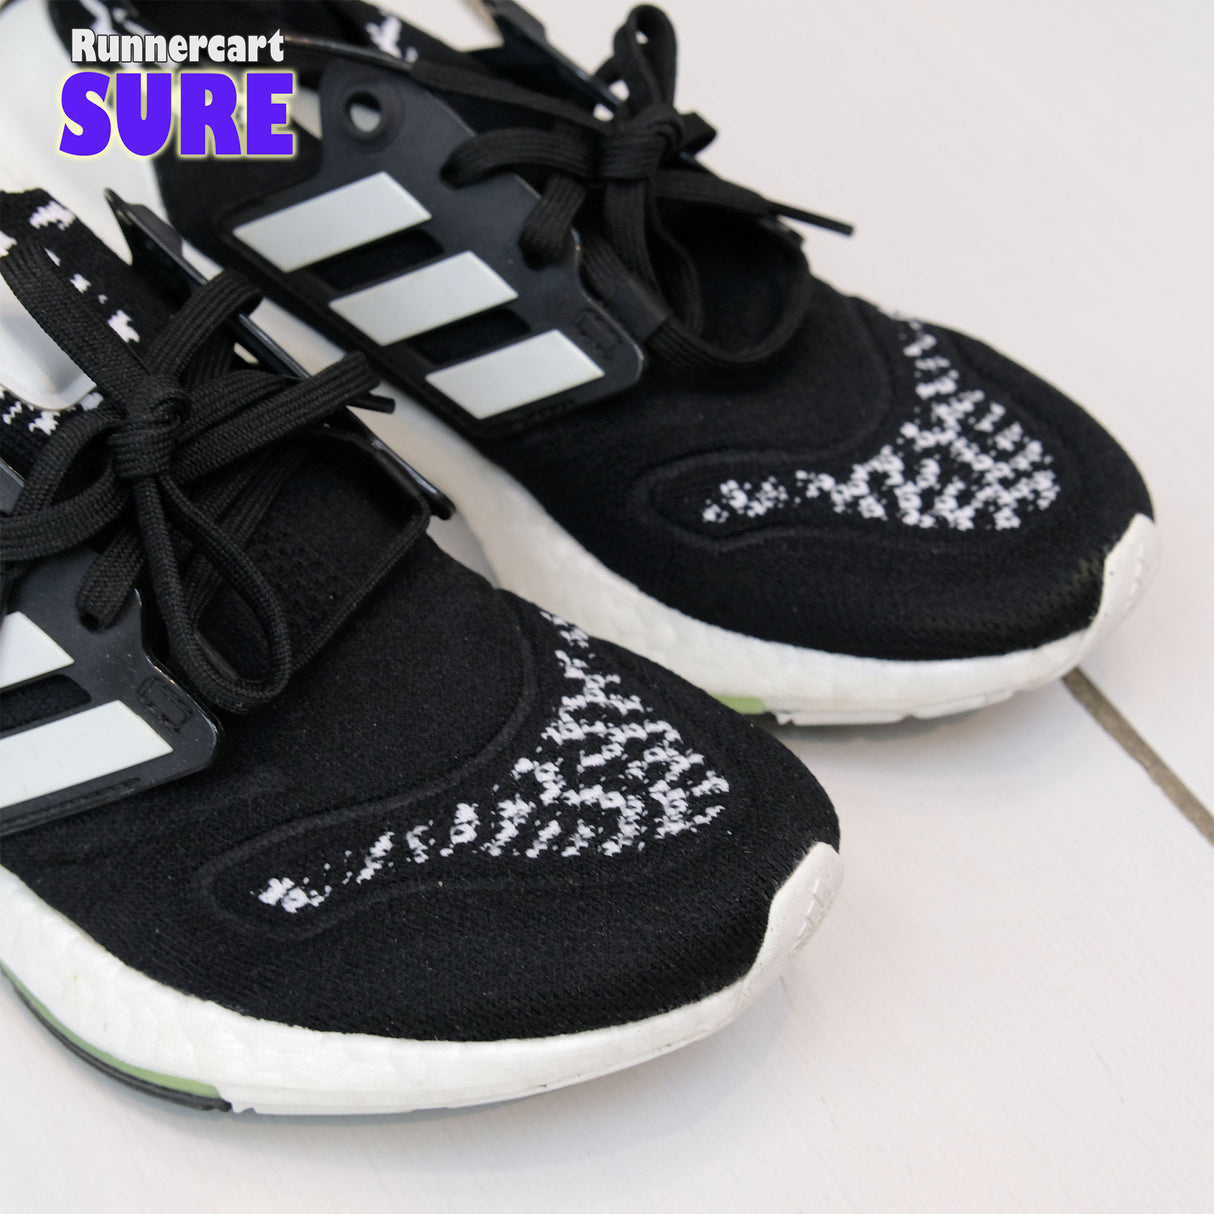 Sure_Adidas Women Ultraboost 23(Black), Size 7.5US (no box)